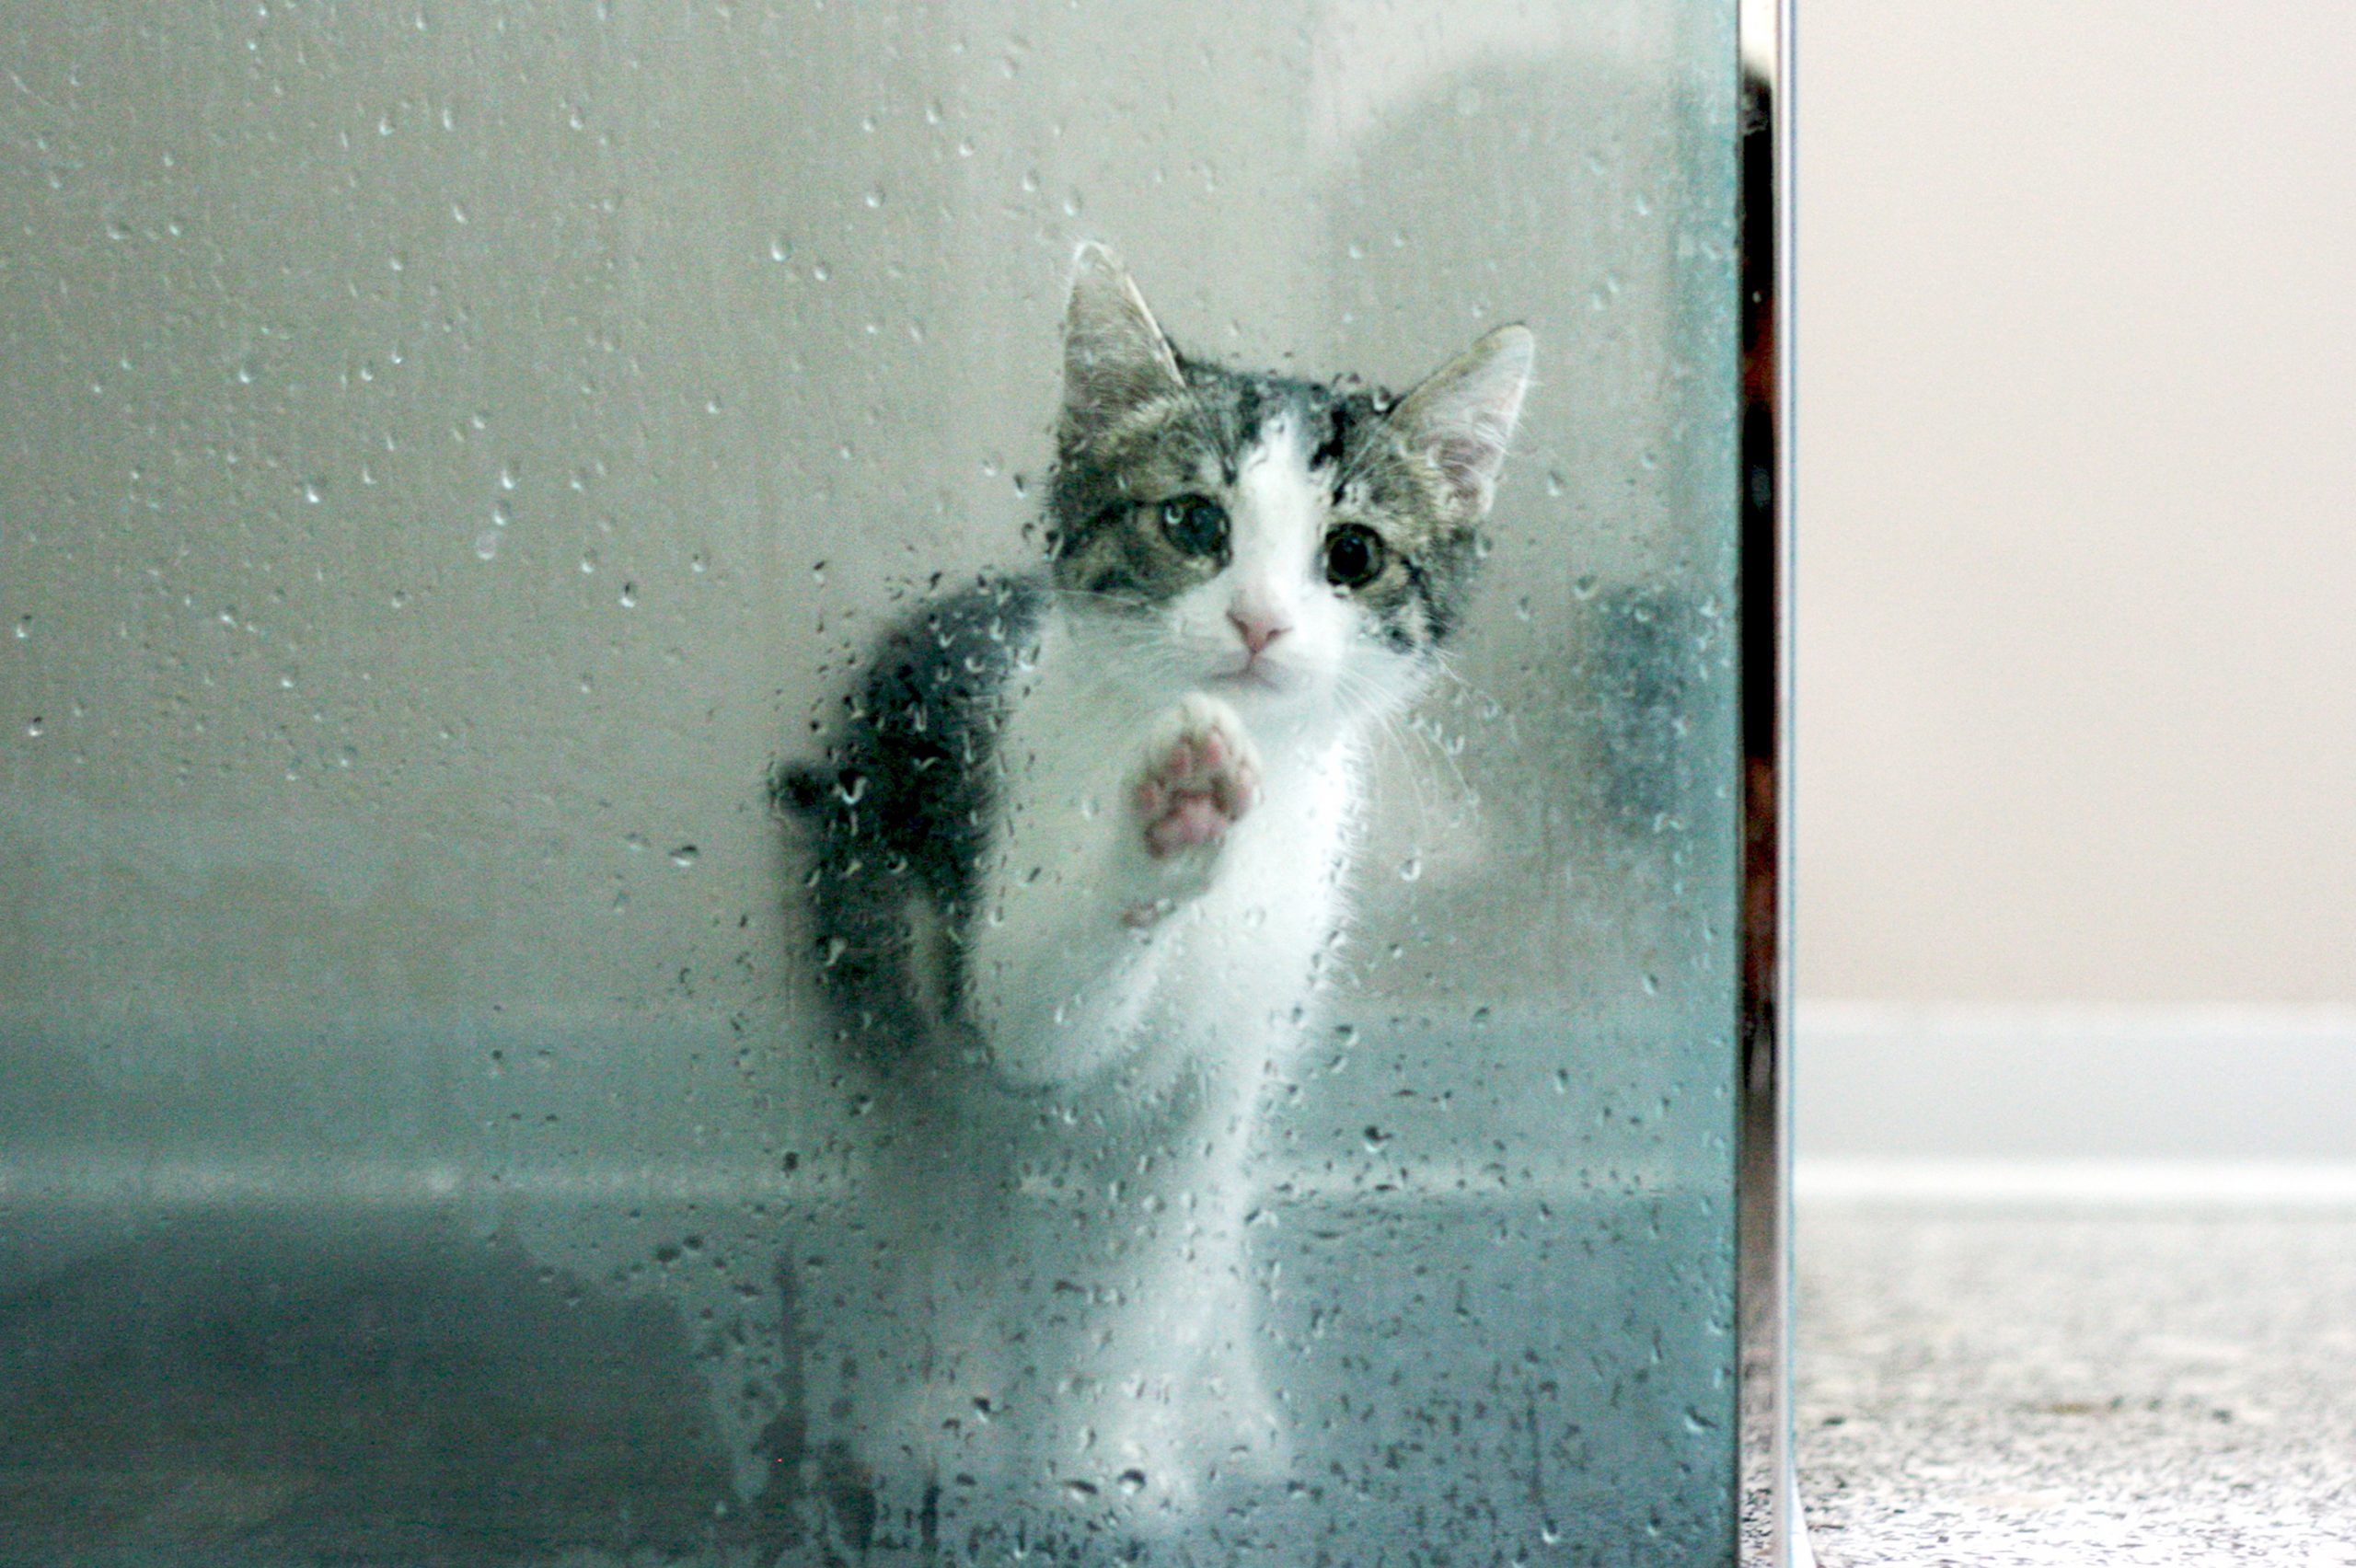 Sad Kitten behind glass shower full of water drops